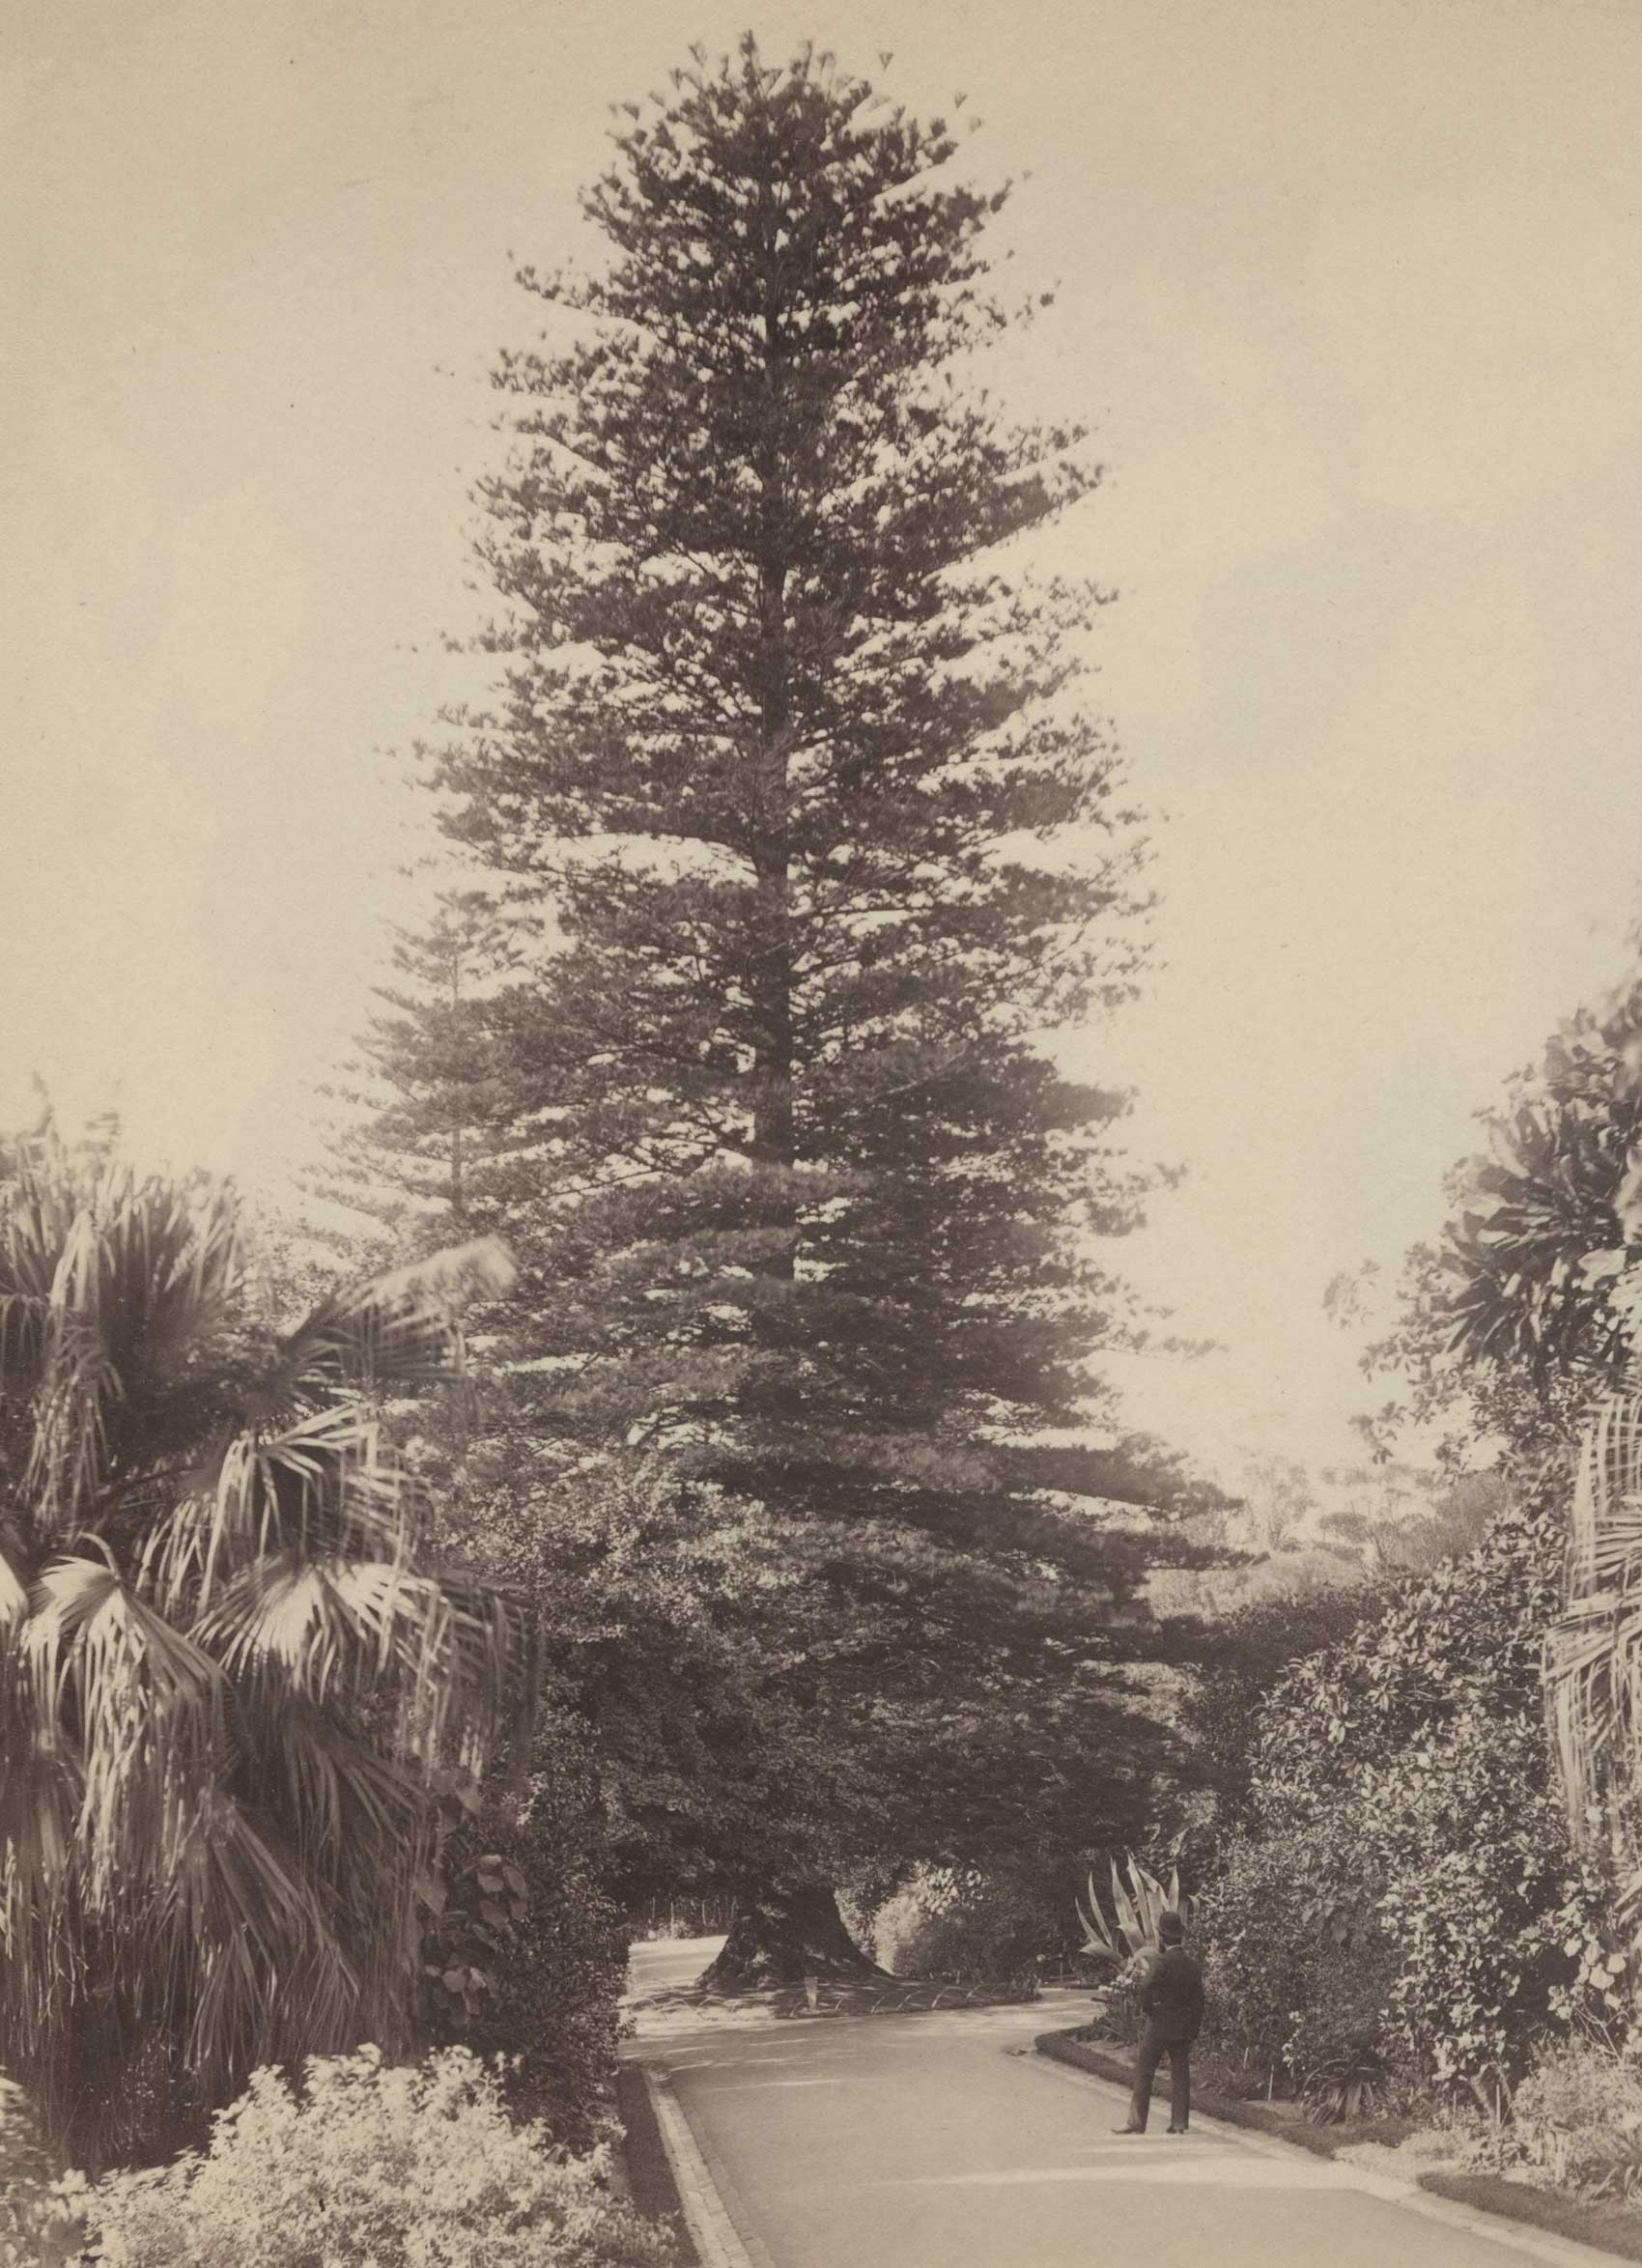 The famed wishing tree, circa 1885